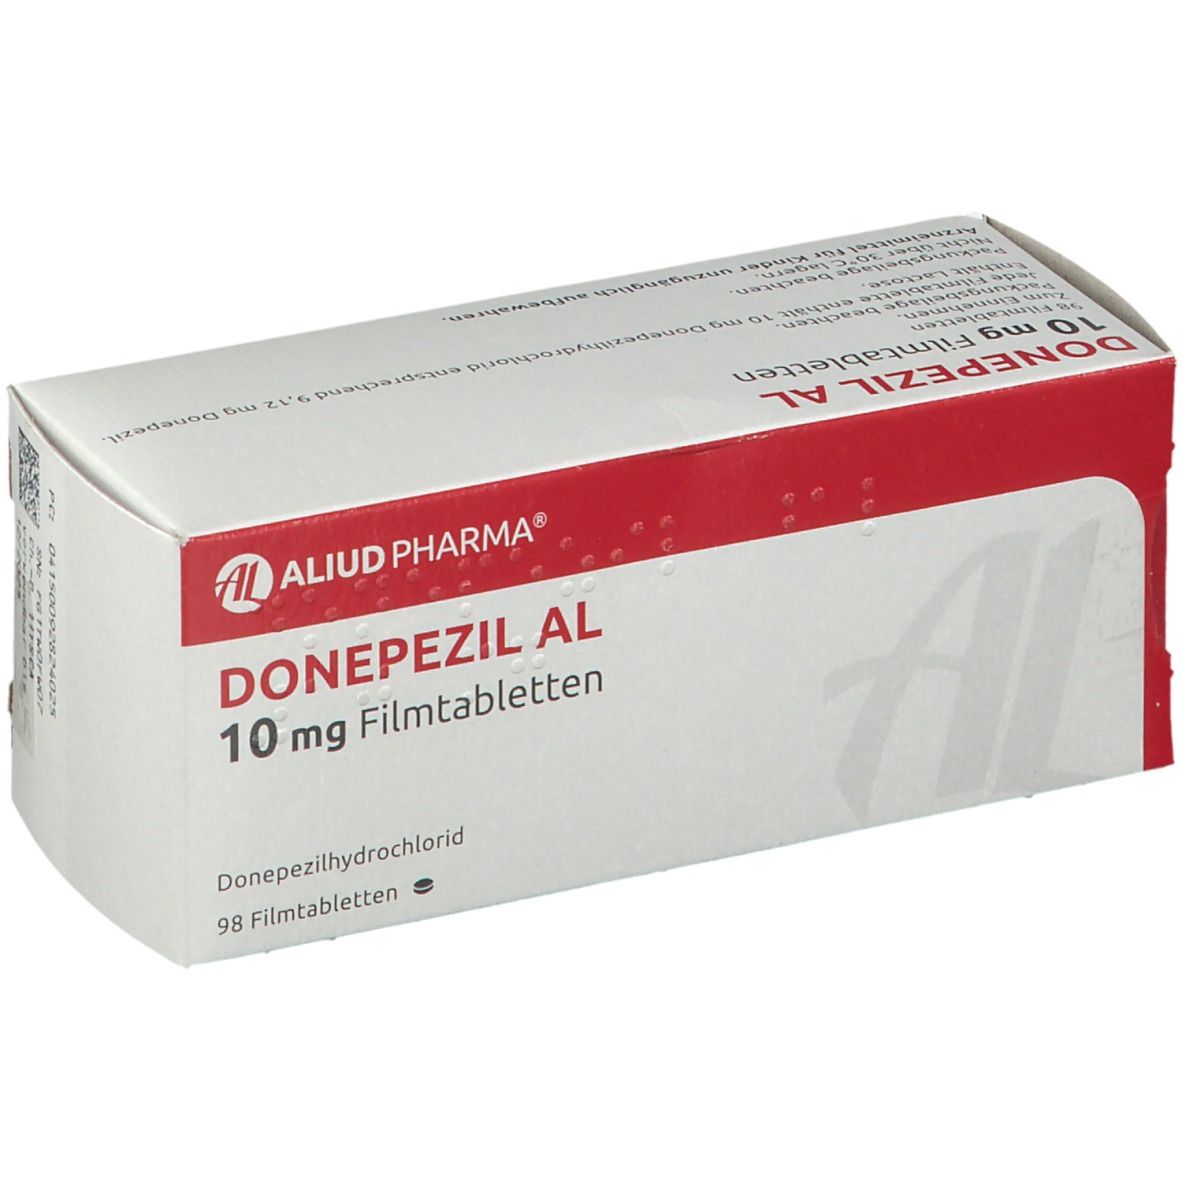 Donepezil AL 10 mg